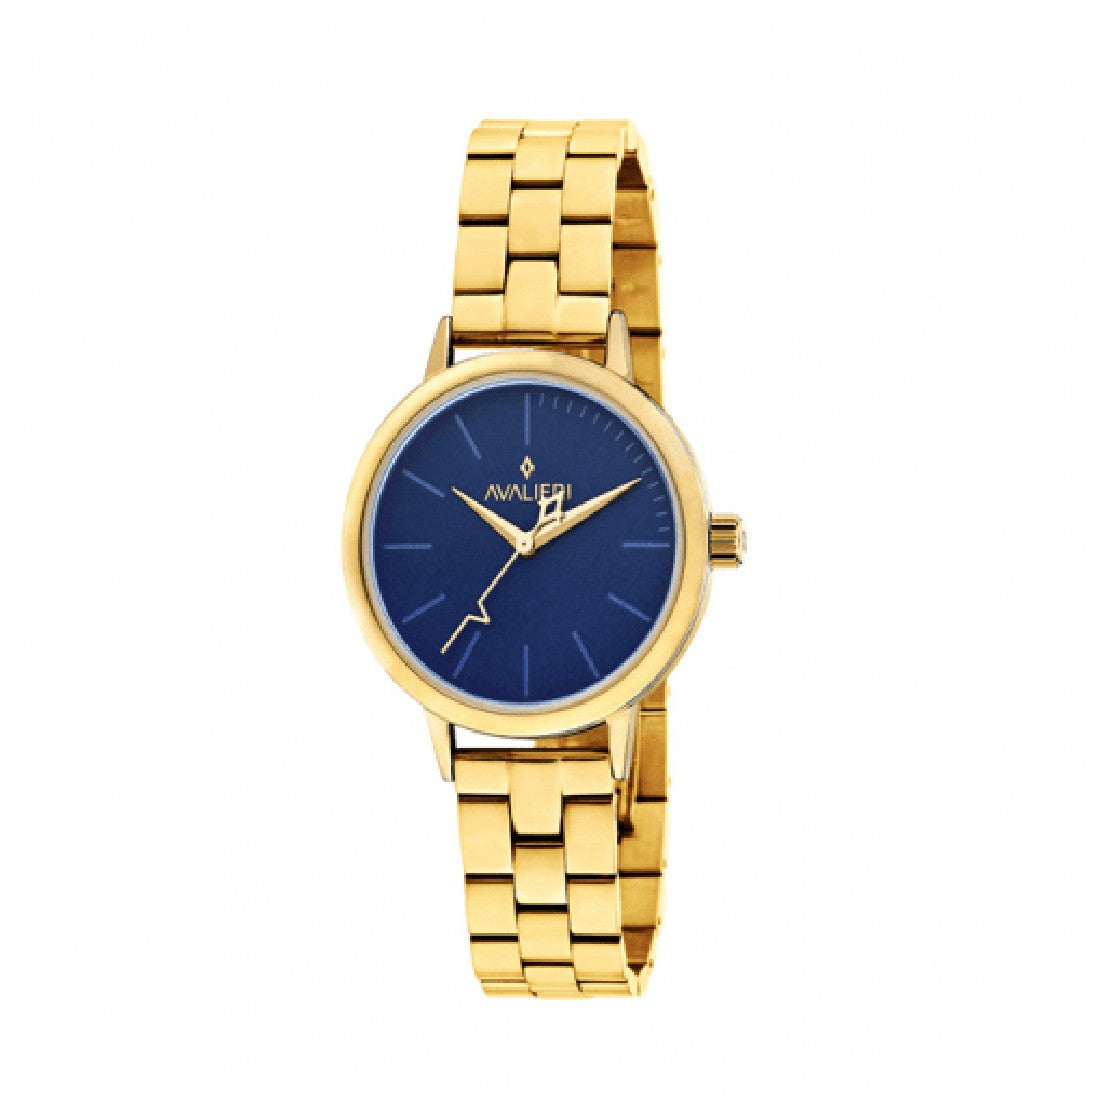 Avalieri Women's Quartz Blue Dial Watch - AV-2281B